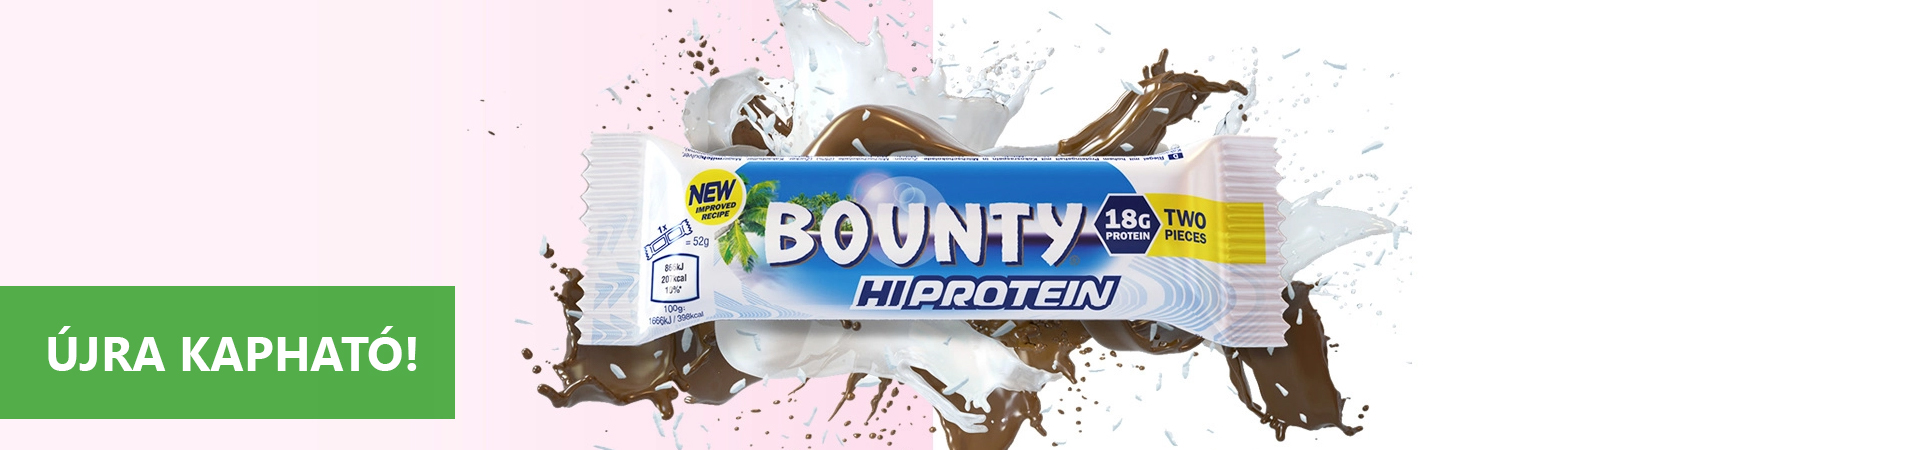 Bounty Hi-Protein